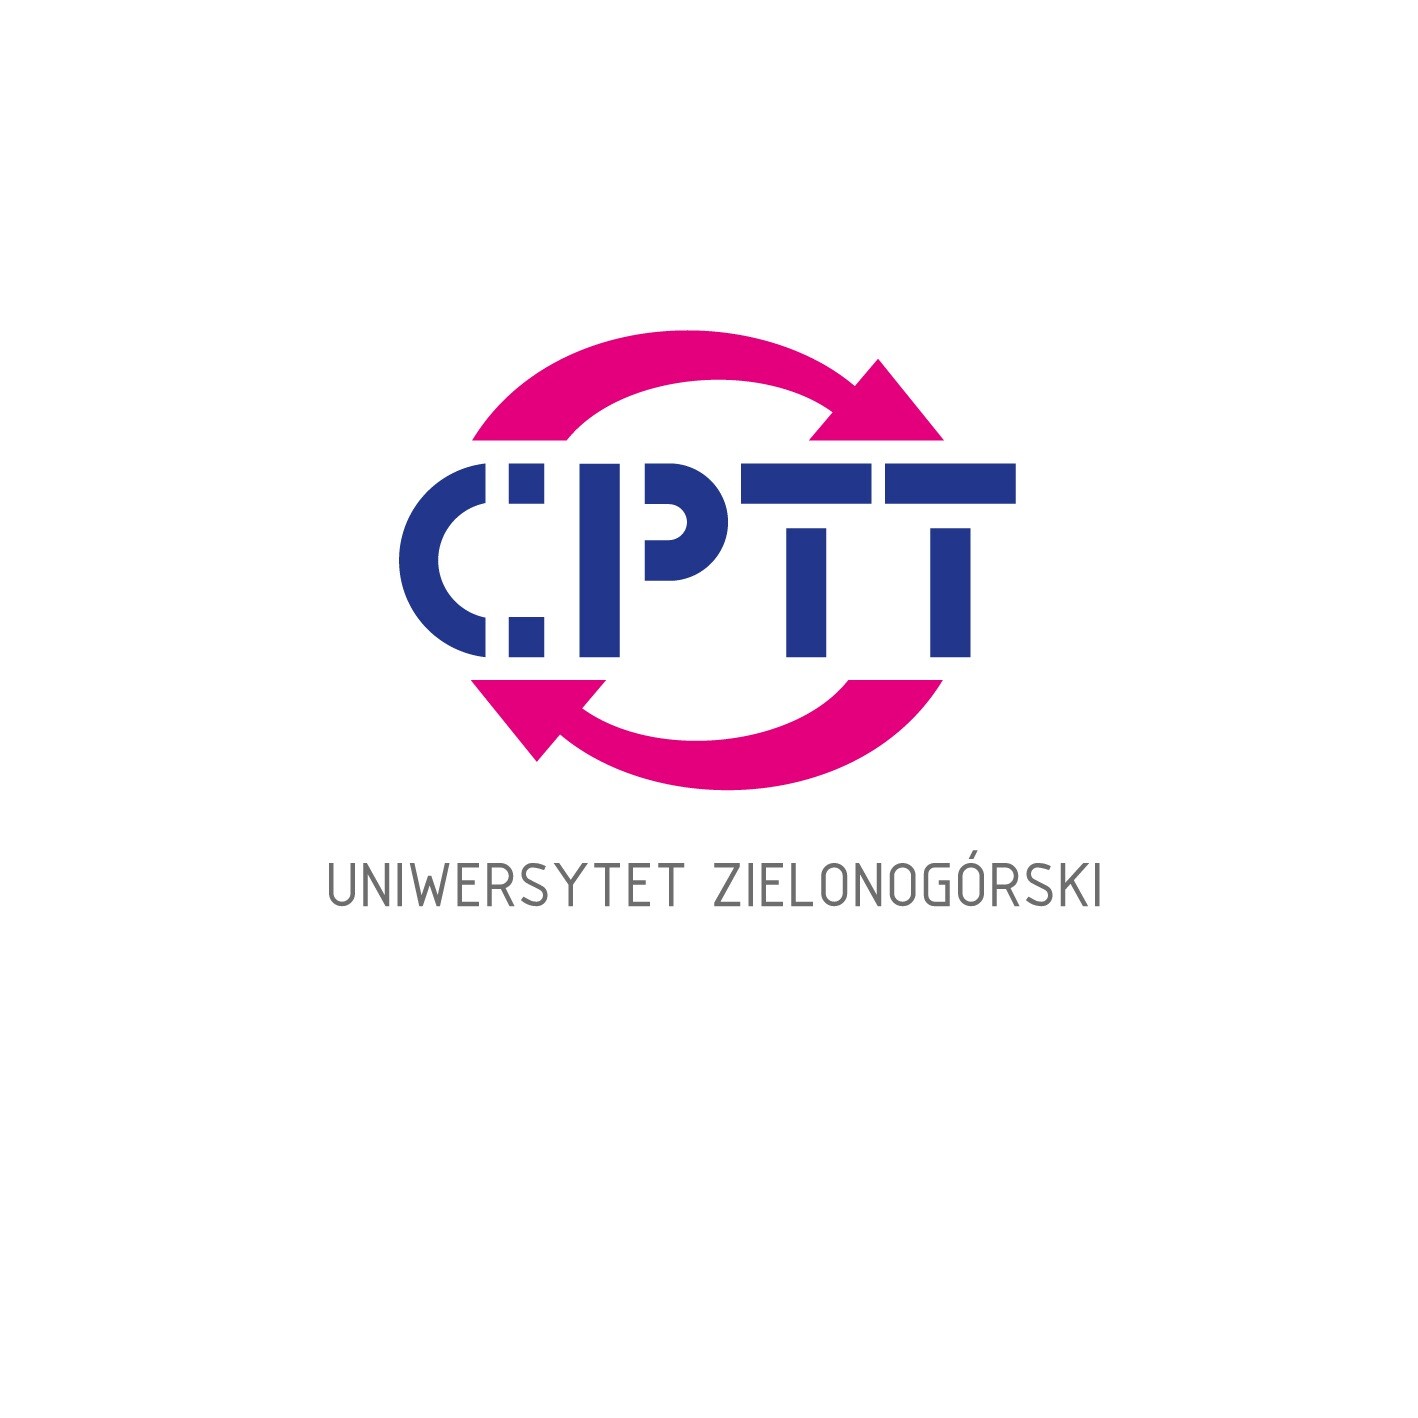 cptt-logo-rgb-1.jpg